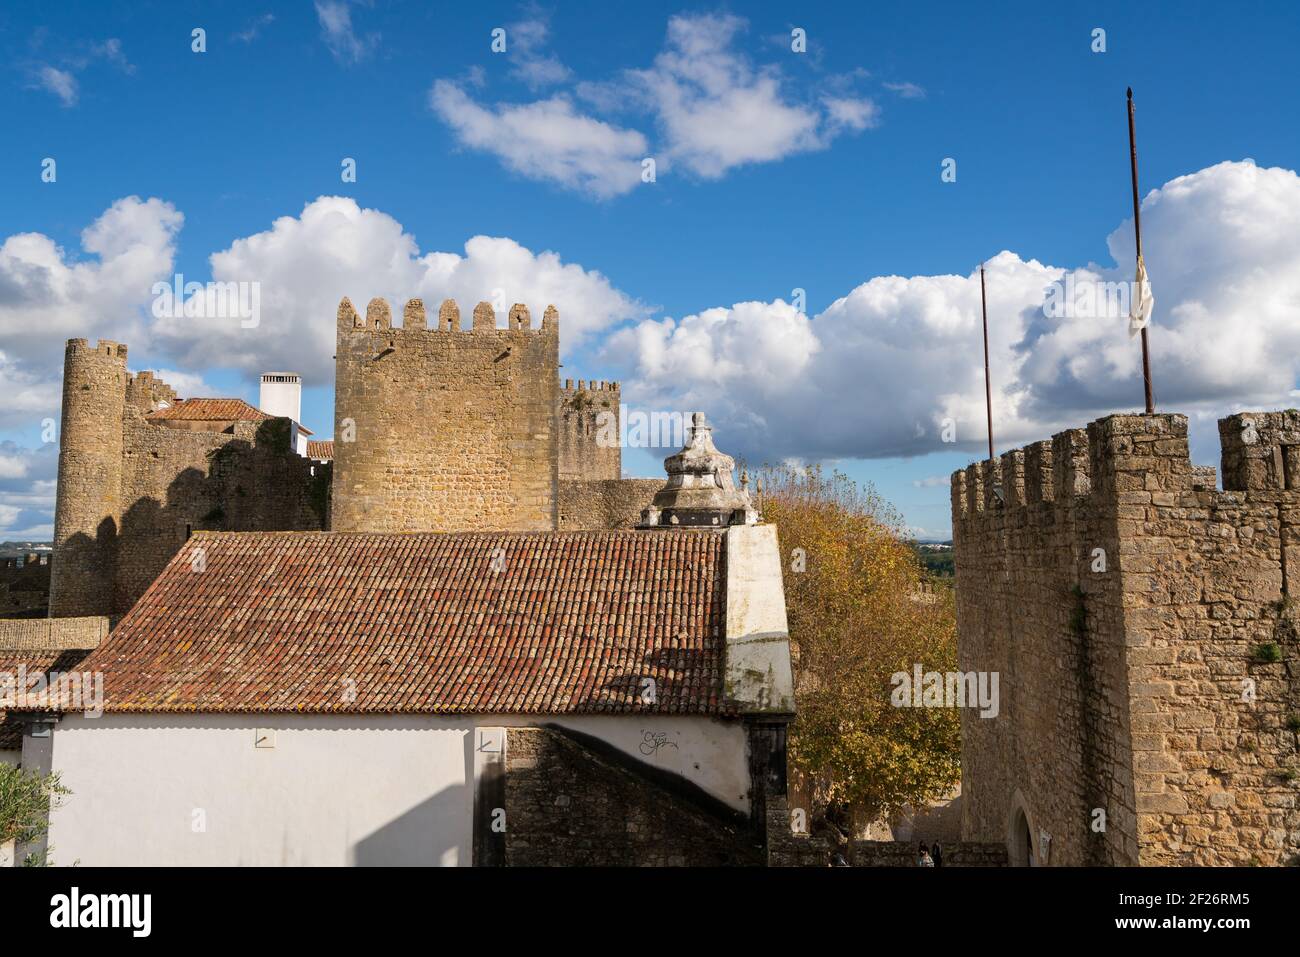 Obidos schöne Dorf Burg Festung Fort Turm in Portugal Stockfoto